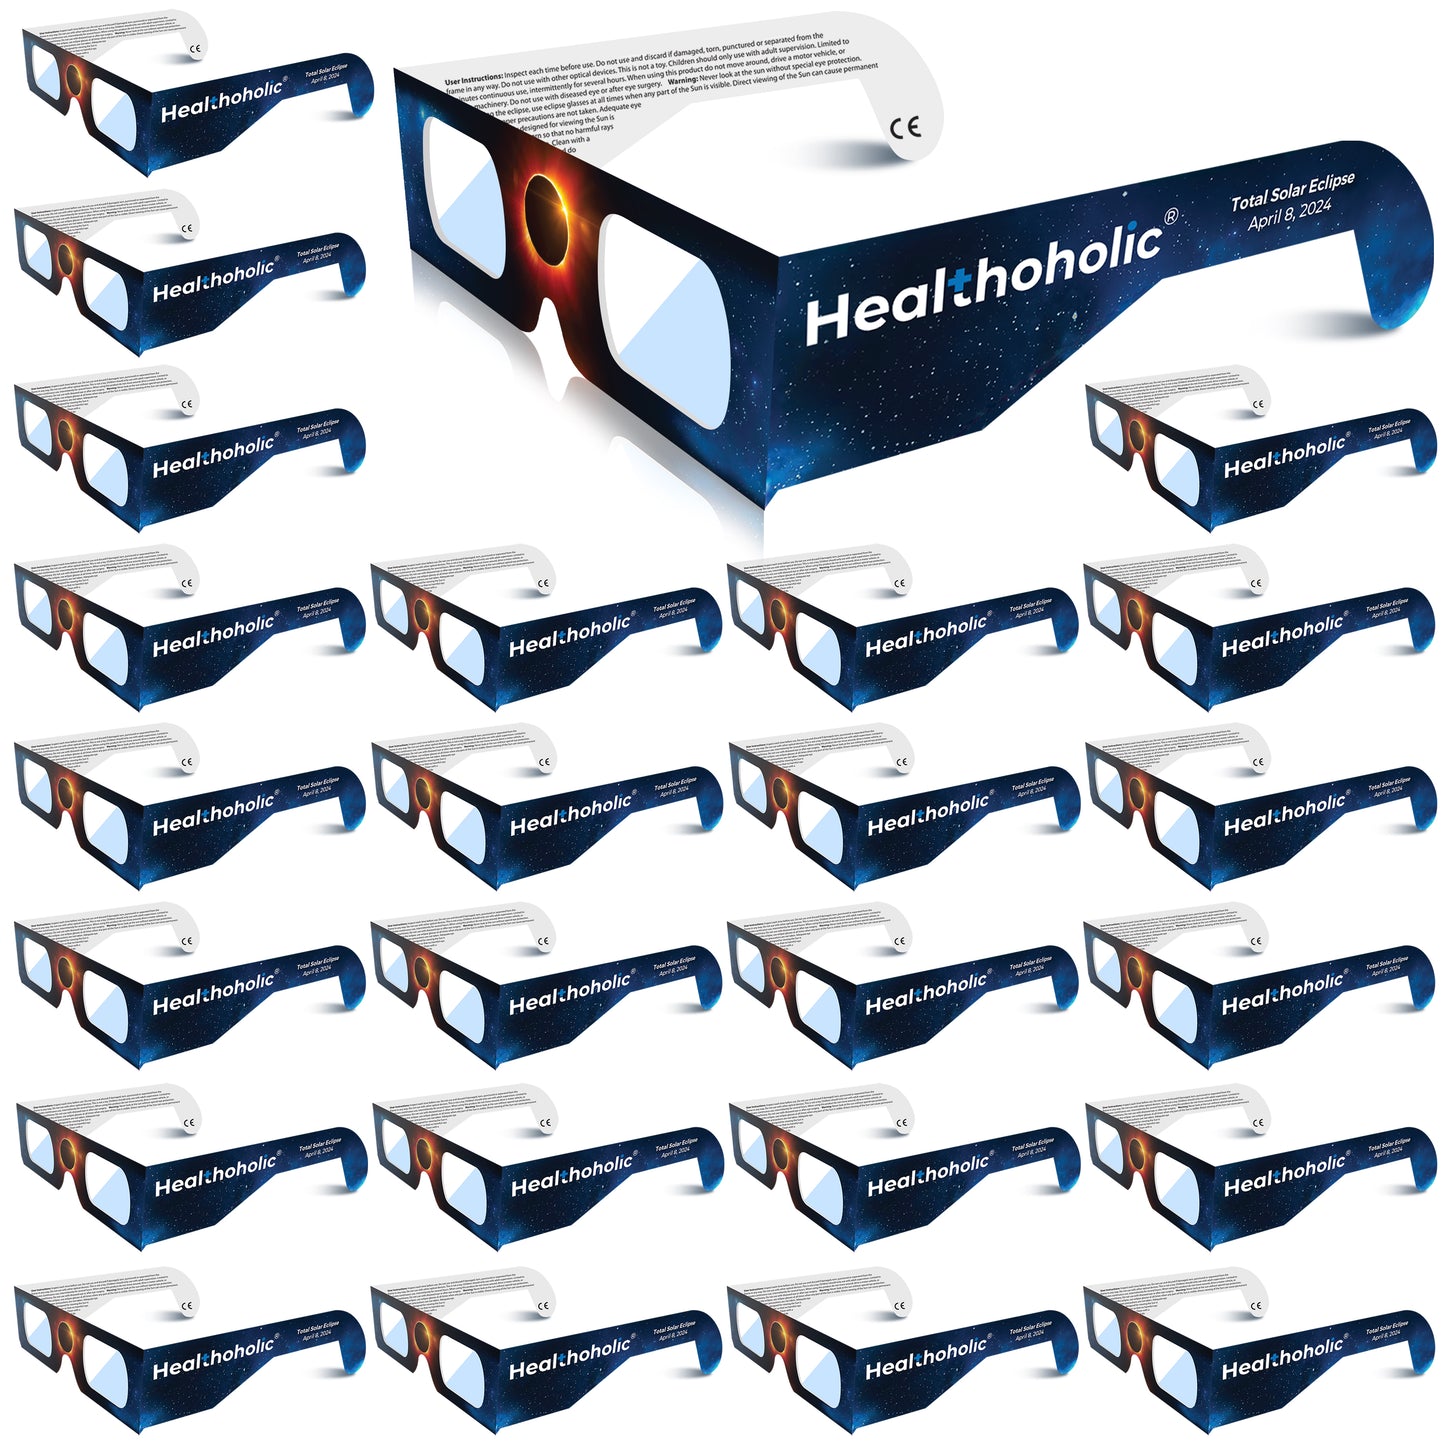 Healthoholic Eclipse Glasses